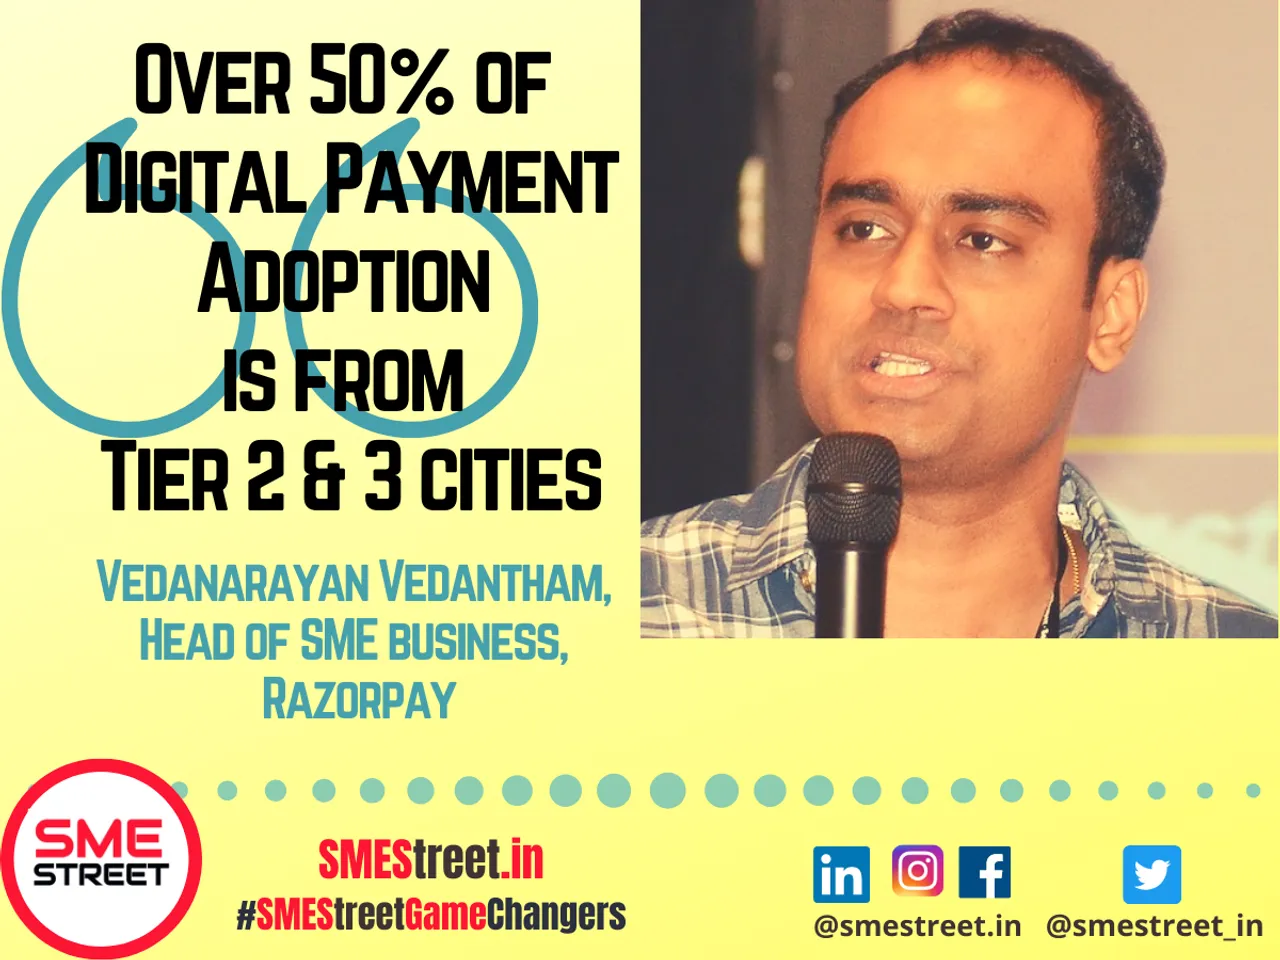 Vedanarayan Vedantham, Head of SME business, Razorpay